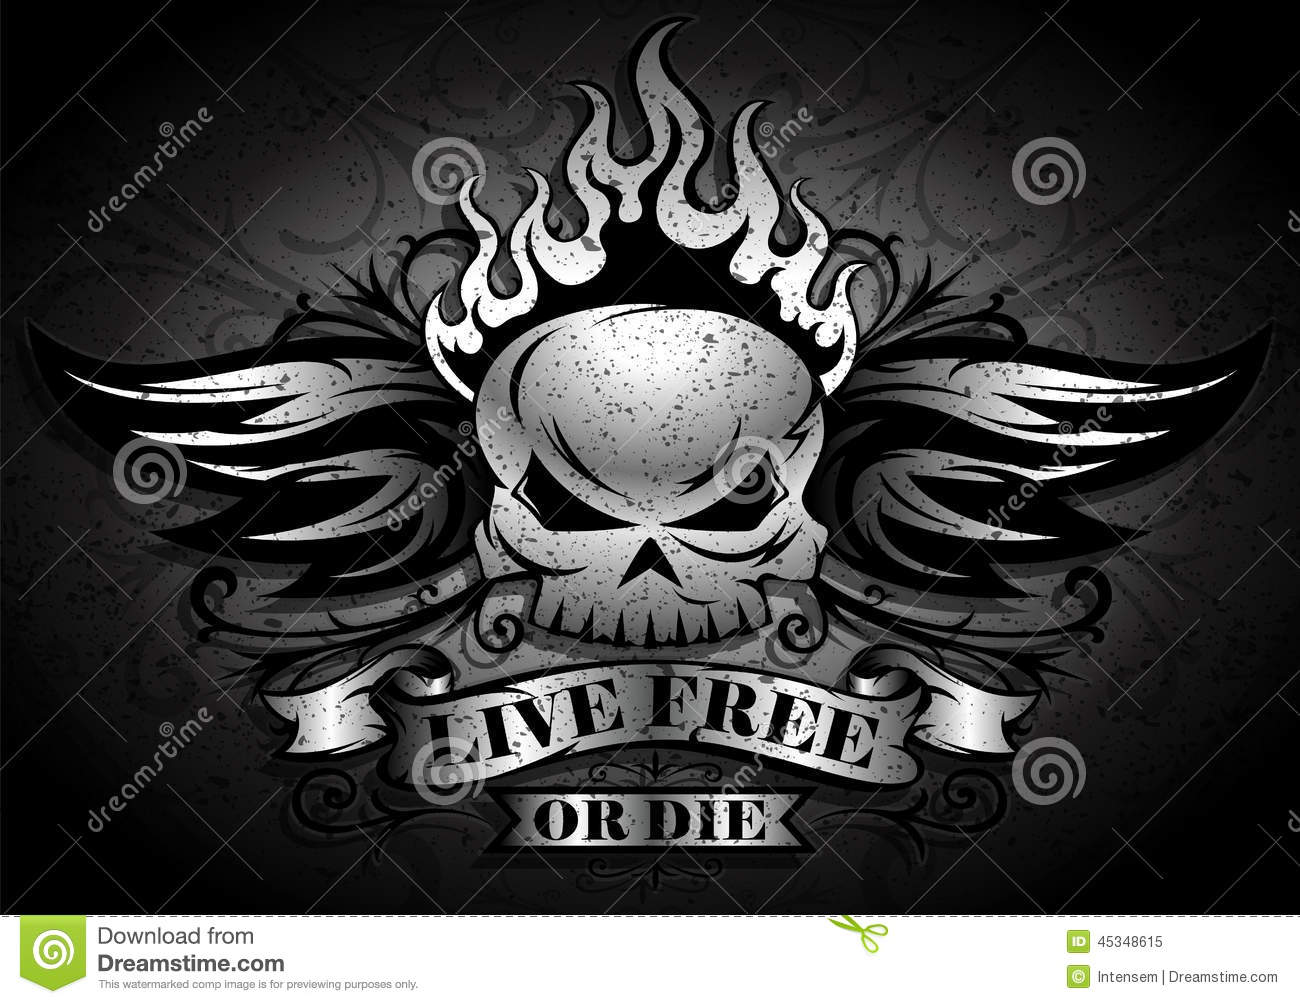 i love you suman name wallpaper,emblem,logo,skull,bone,symbol